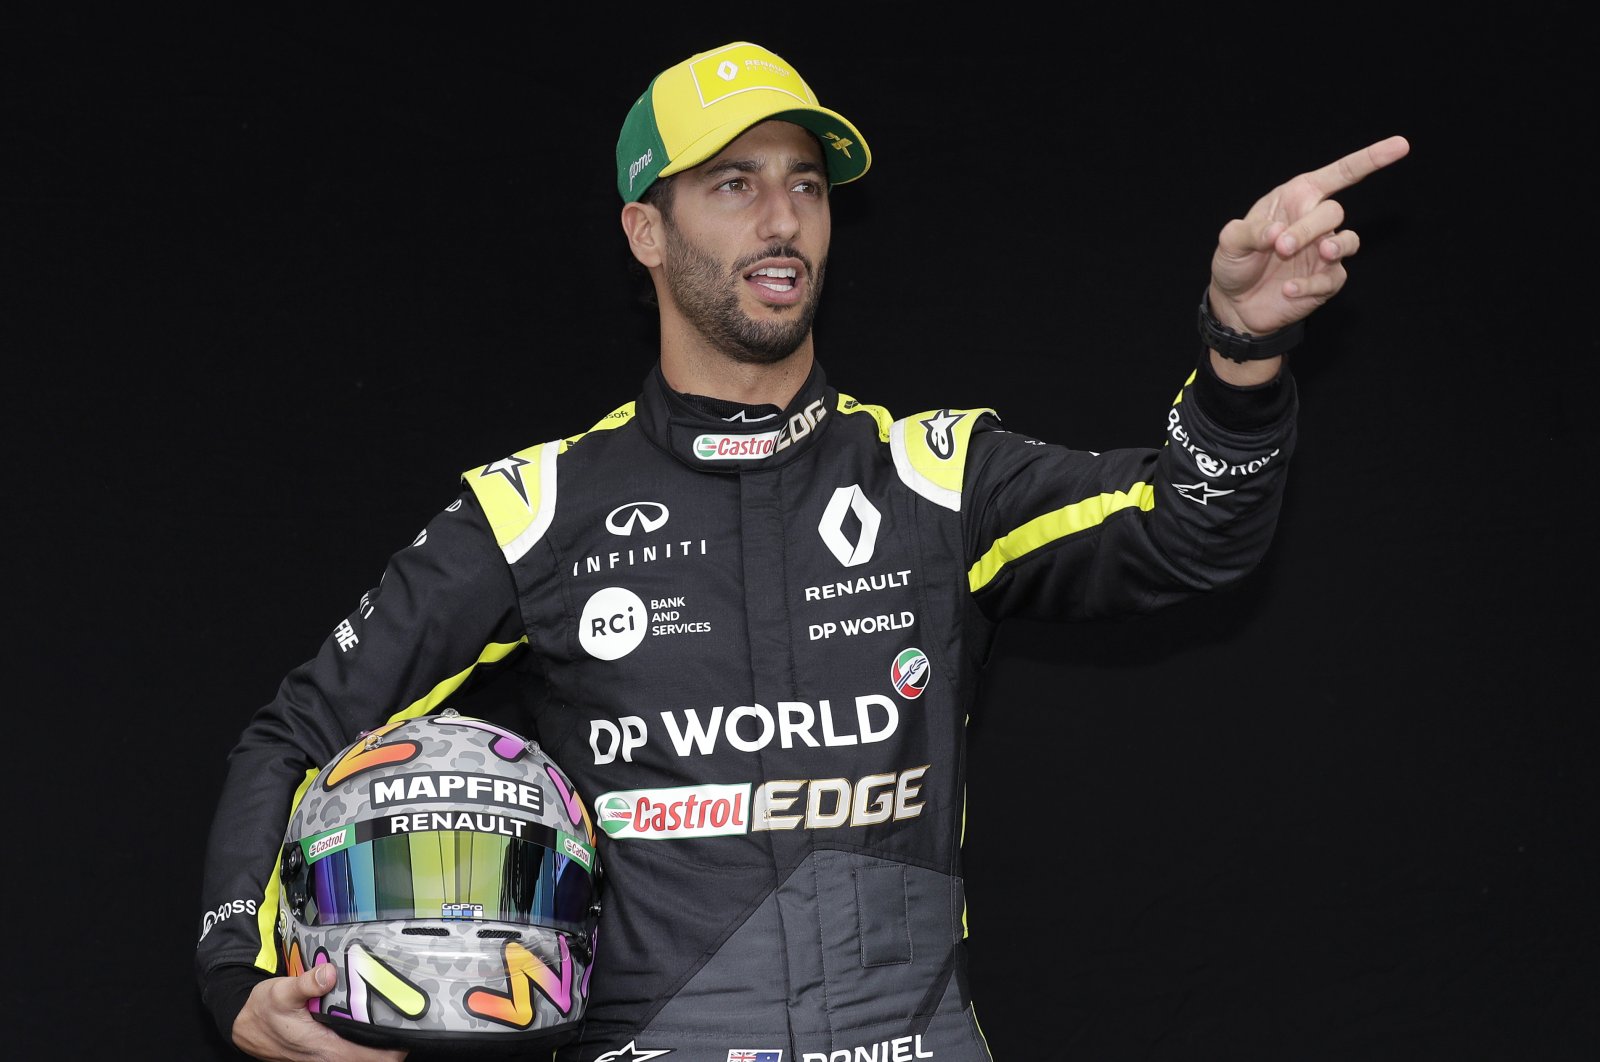 Daniel Ricciardo poses for a photo at the Australian GP in Melbourne, March 12, 2020. (AP Photo)